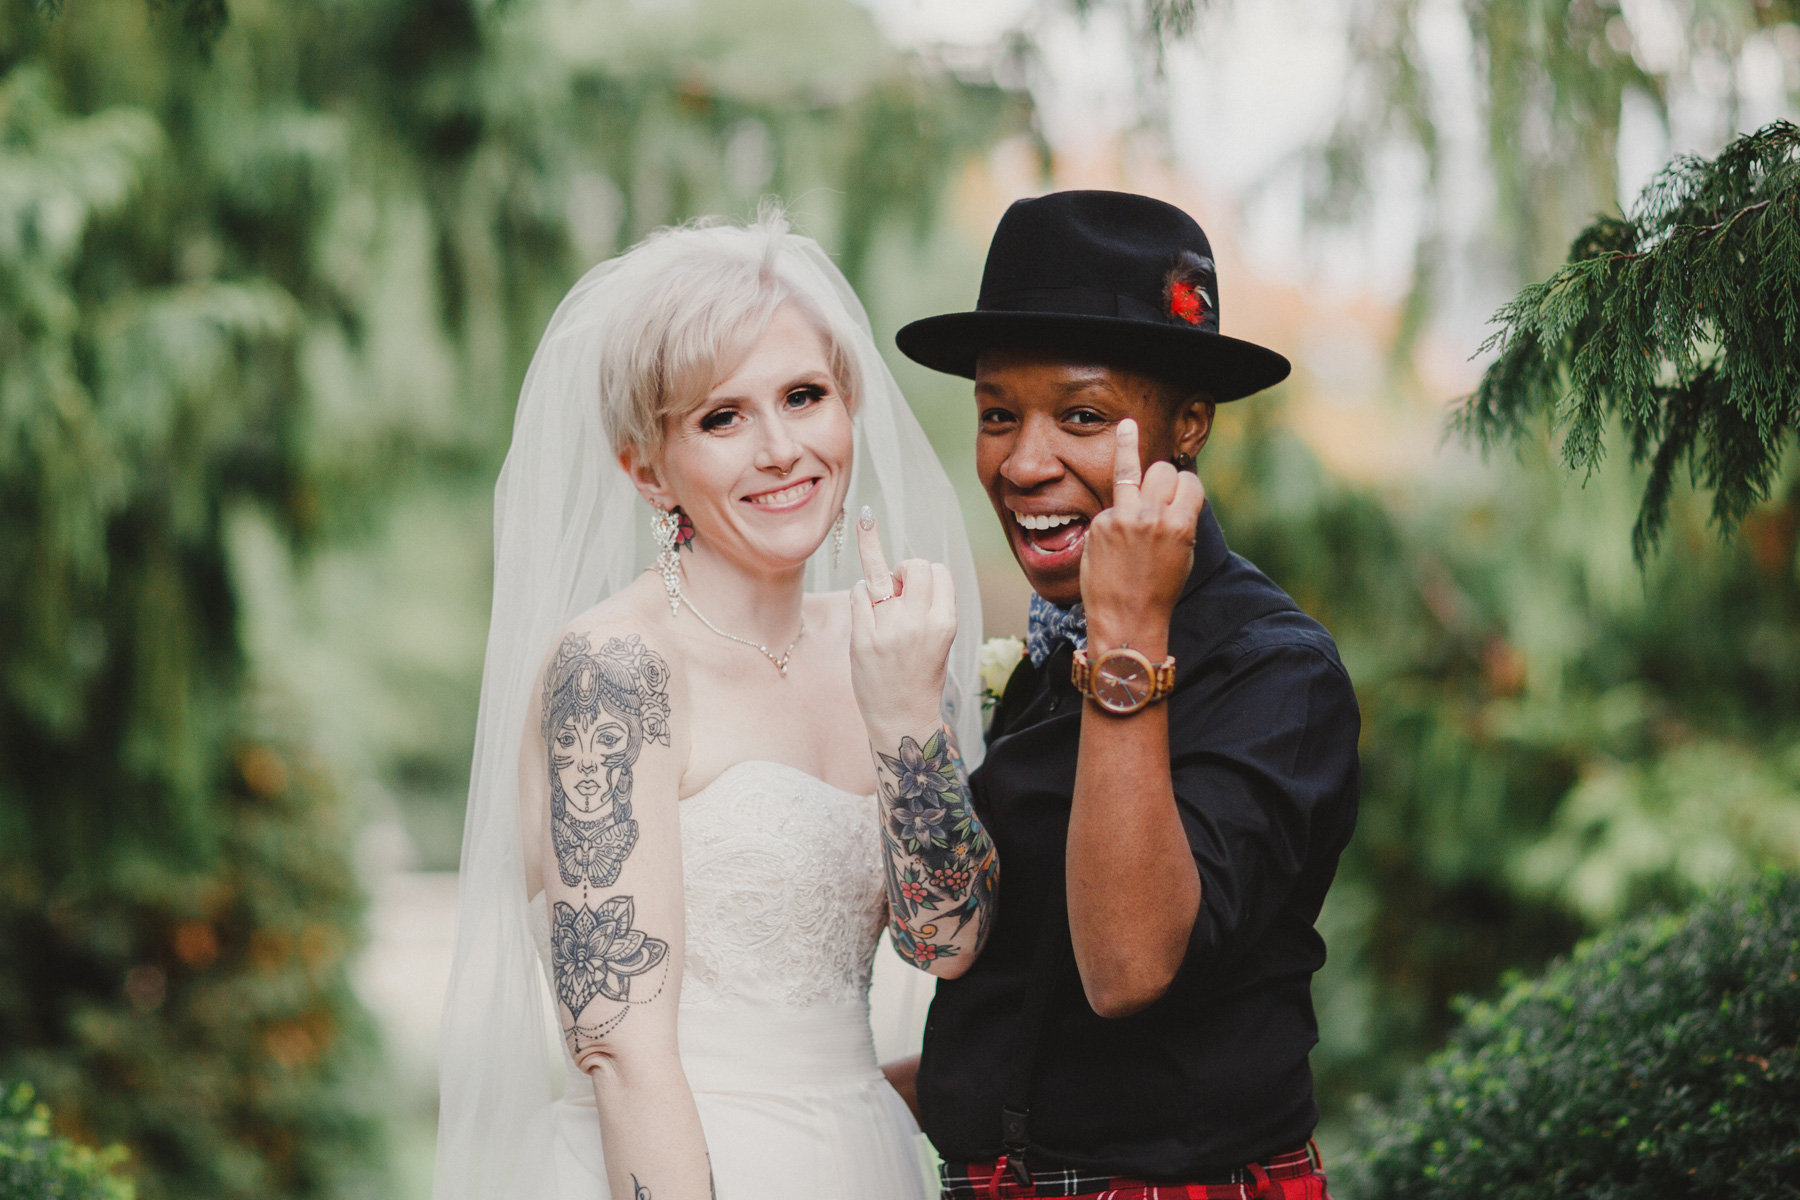 How to Photograph Same-Sex Weddings